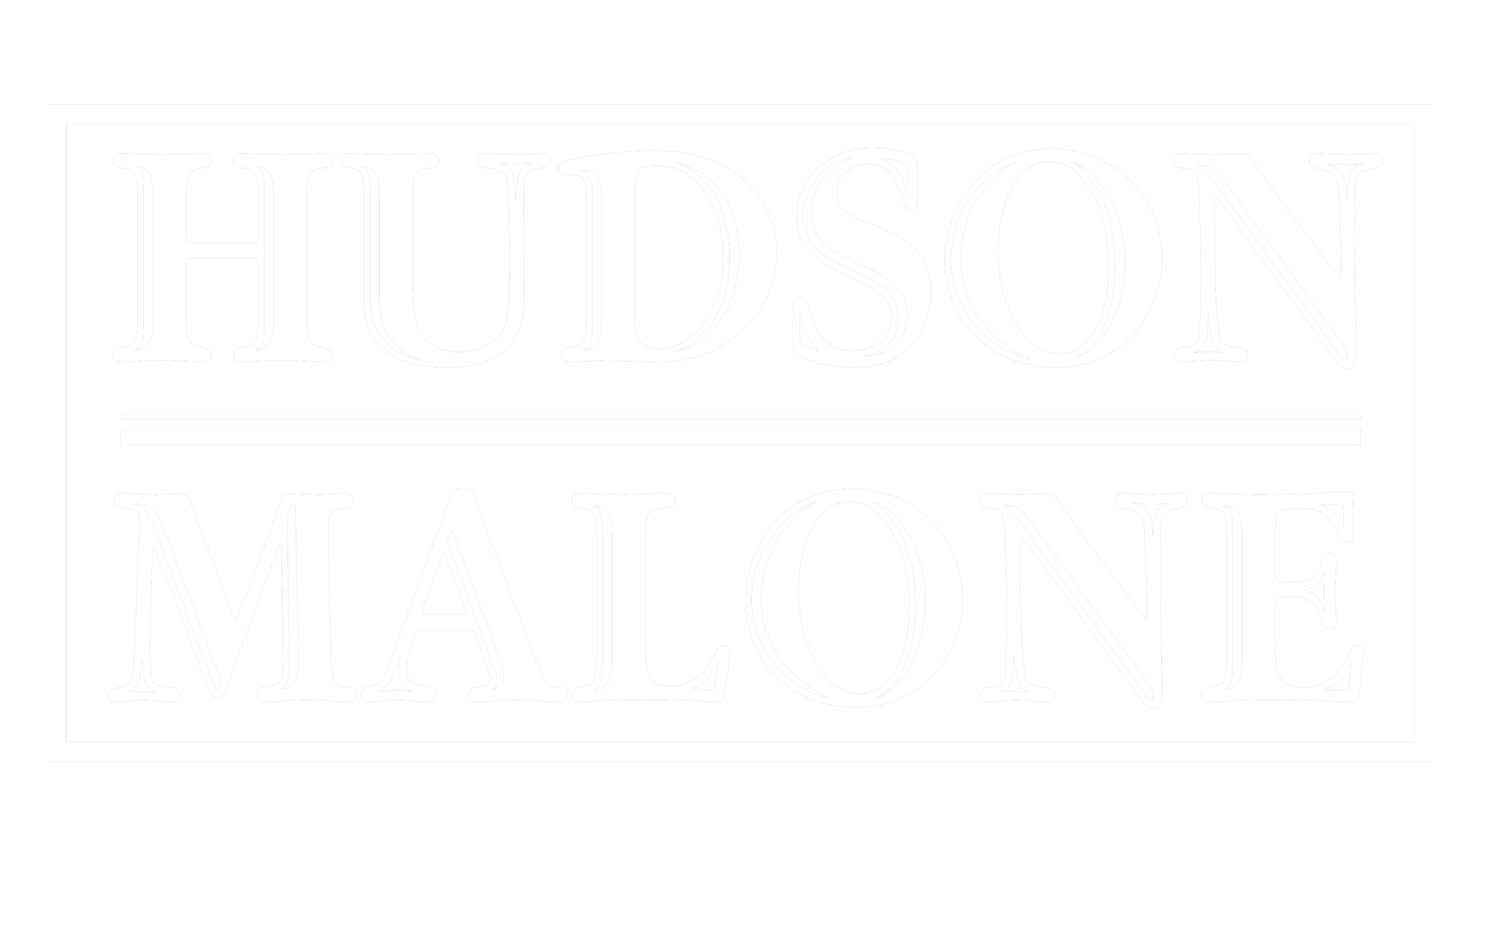 Hudson Malone 